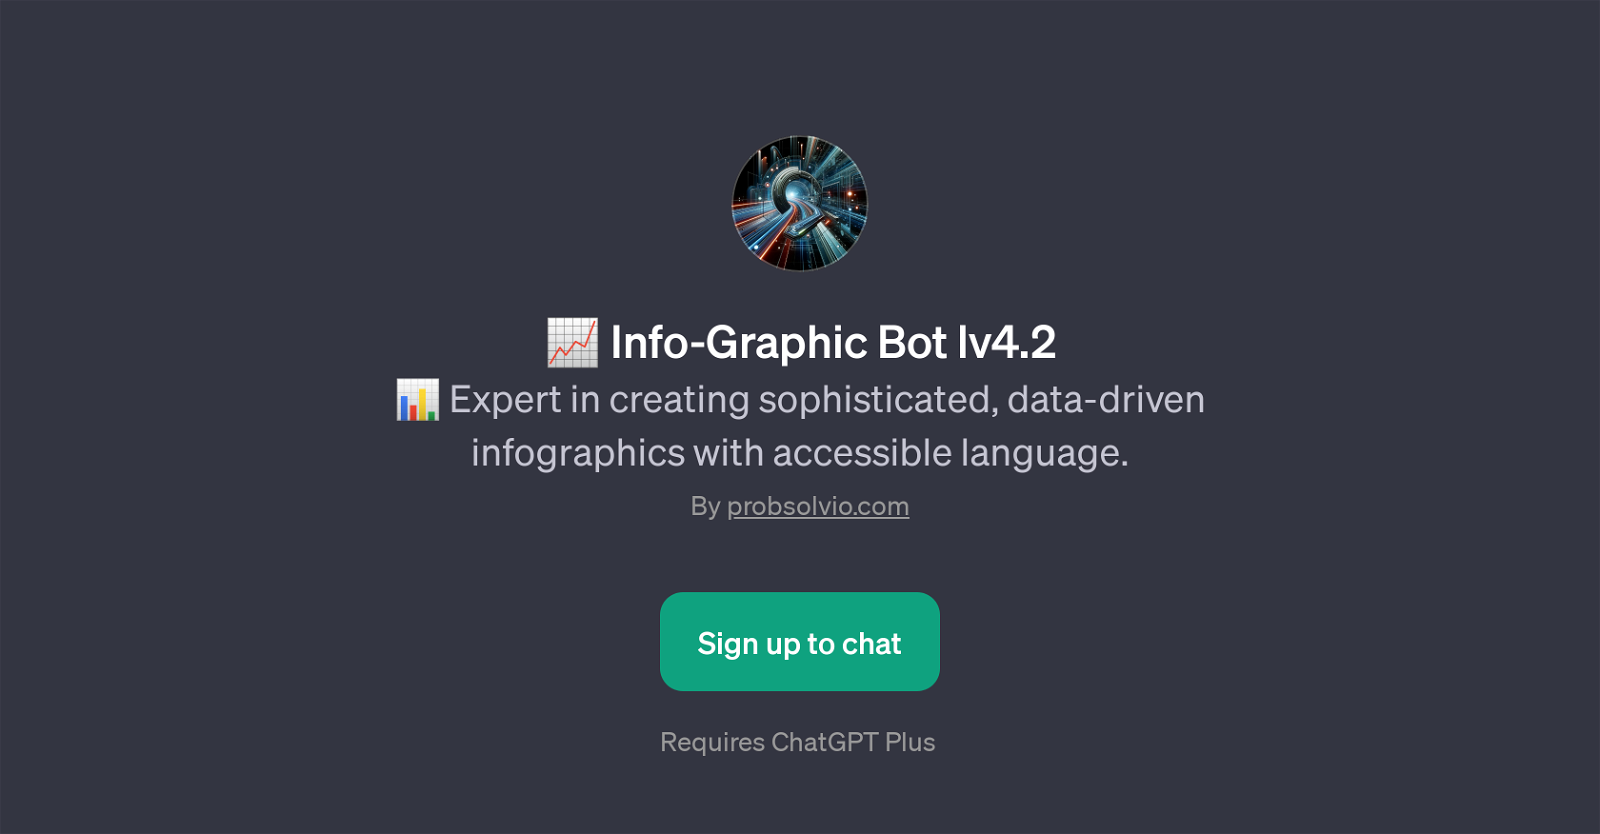 Info-Graphic Bot lv4.2 website